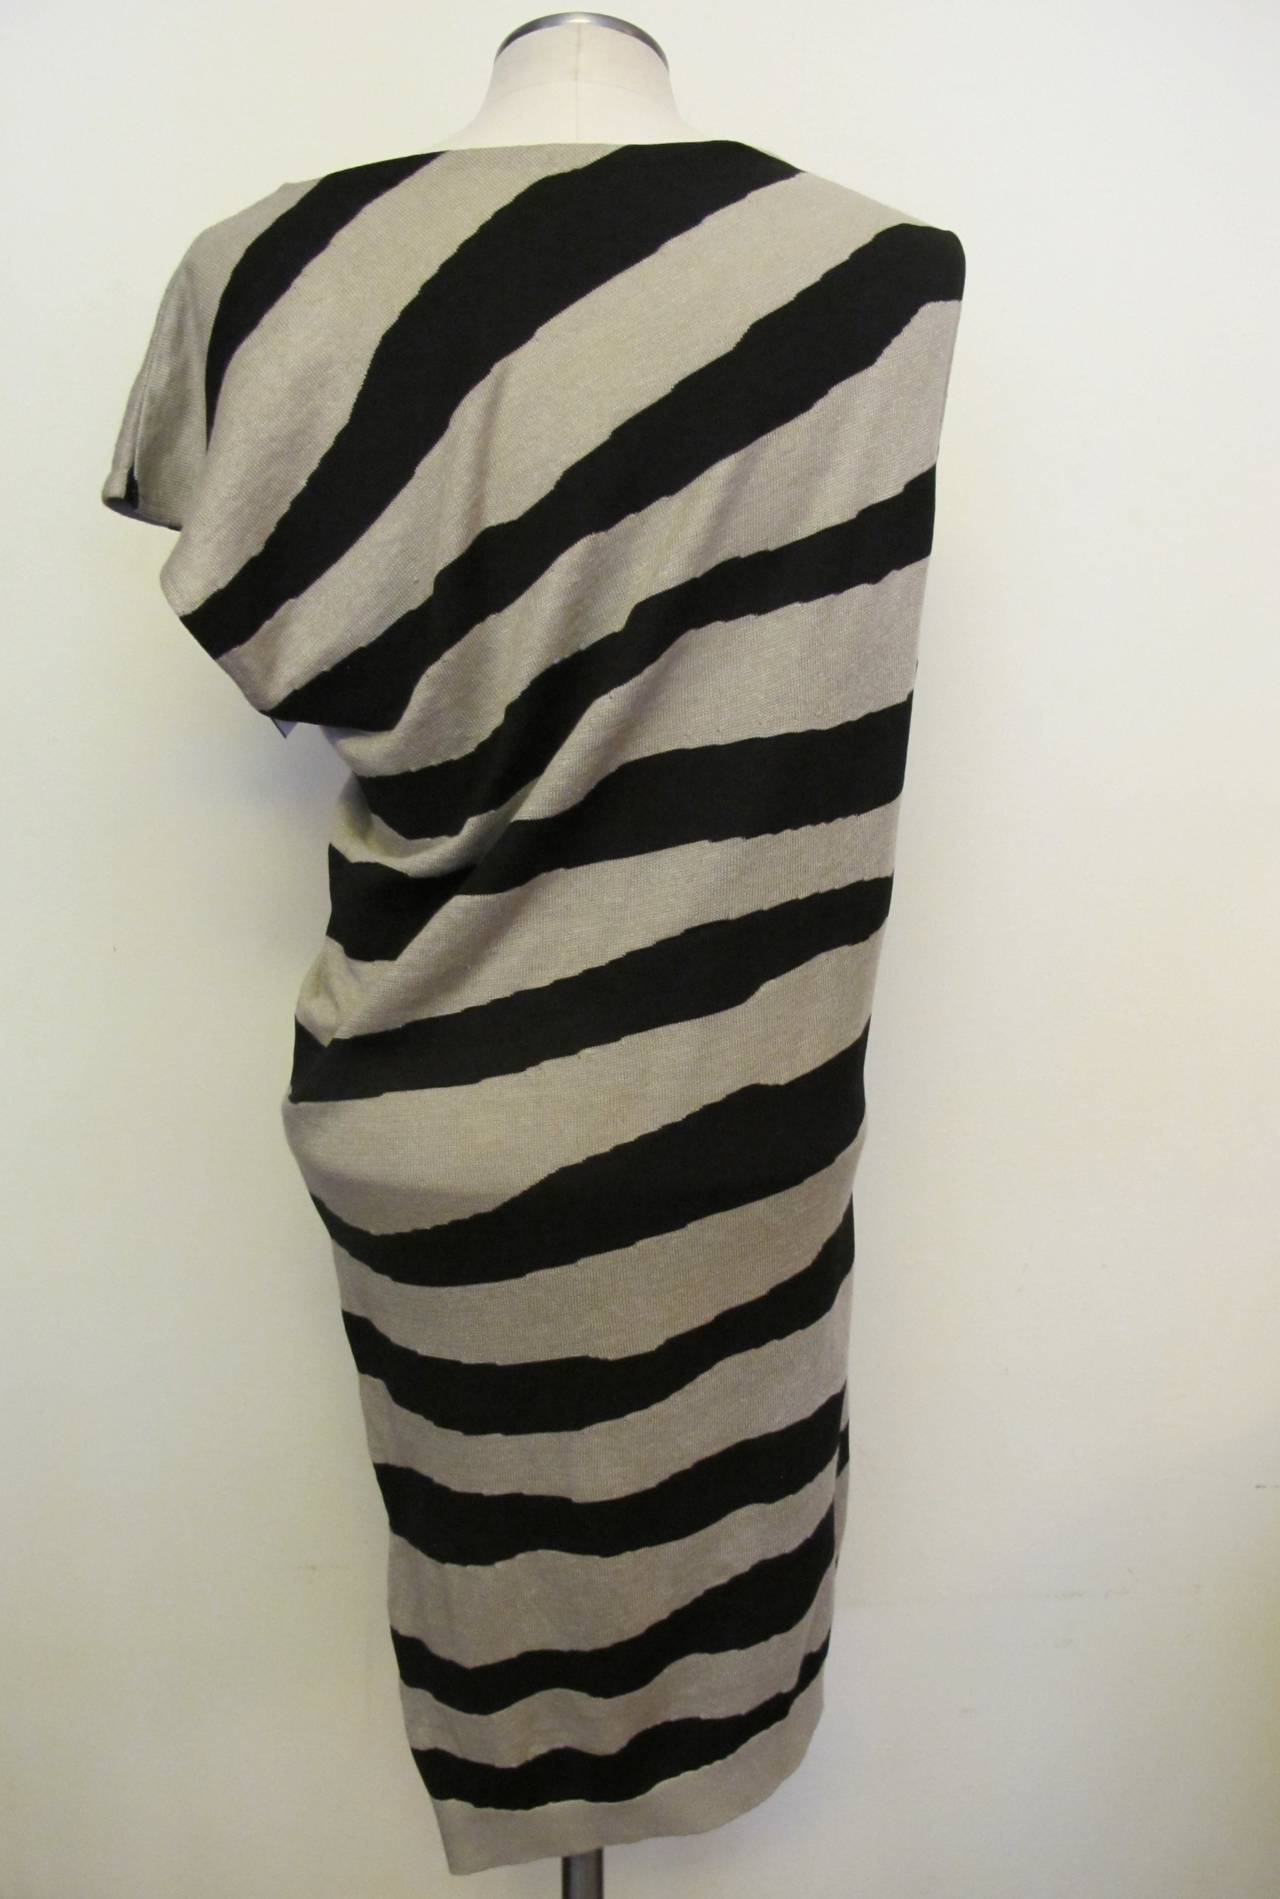 Balenciaga Zebra Striped Sleeveless Dress In New Condition For Sale In San Francisco, CA